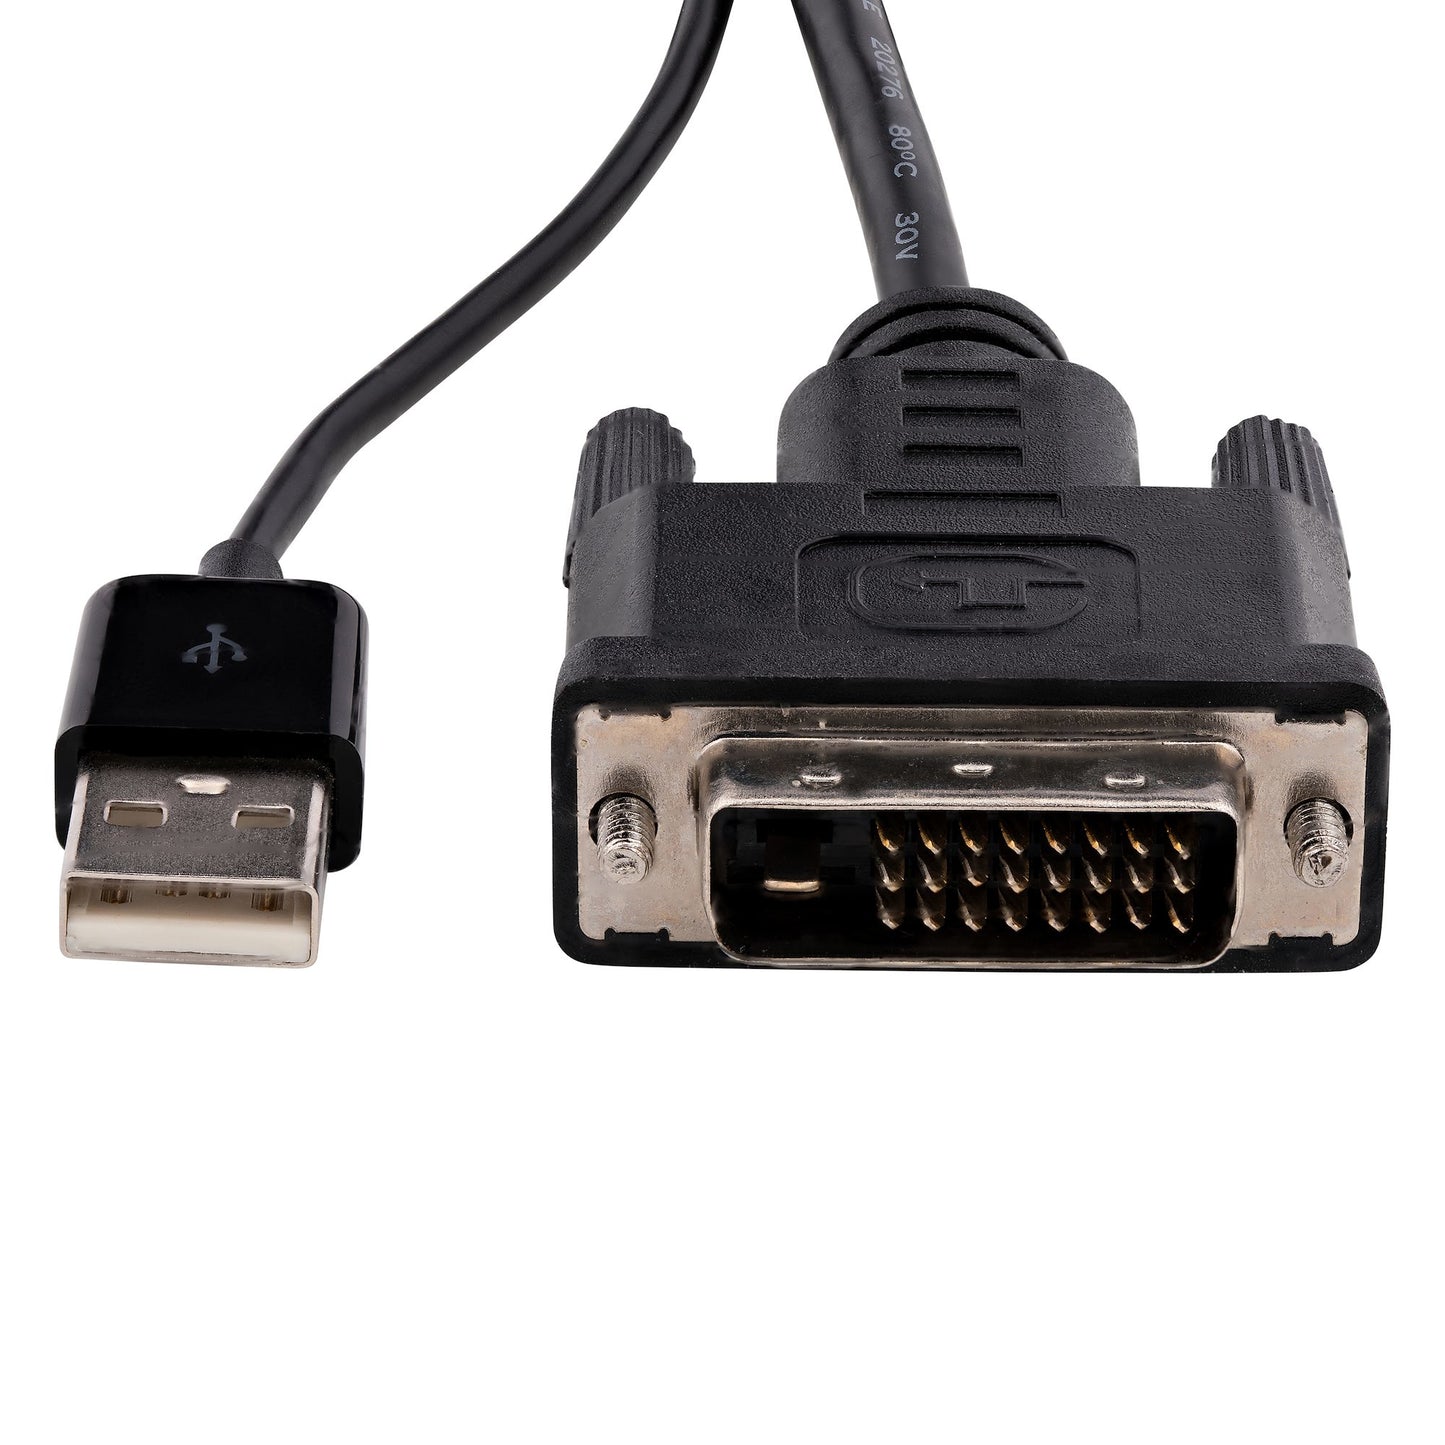 StarTech.com DVI to DisplayPort Adapter - USB Power - 1920 x 1200 - DVI to DisplayPort Converter - Video Adapter - DVI-D to DP-2